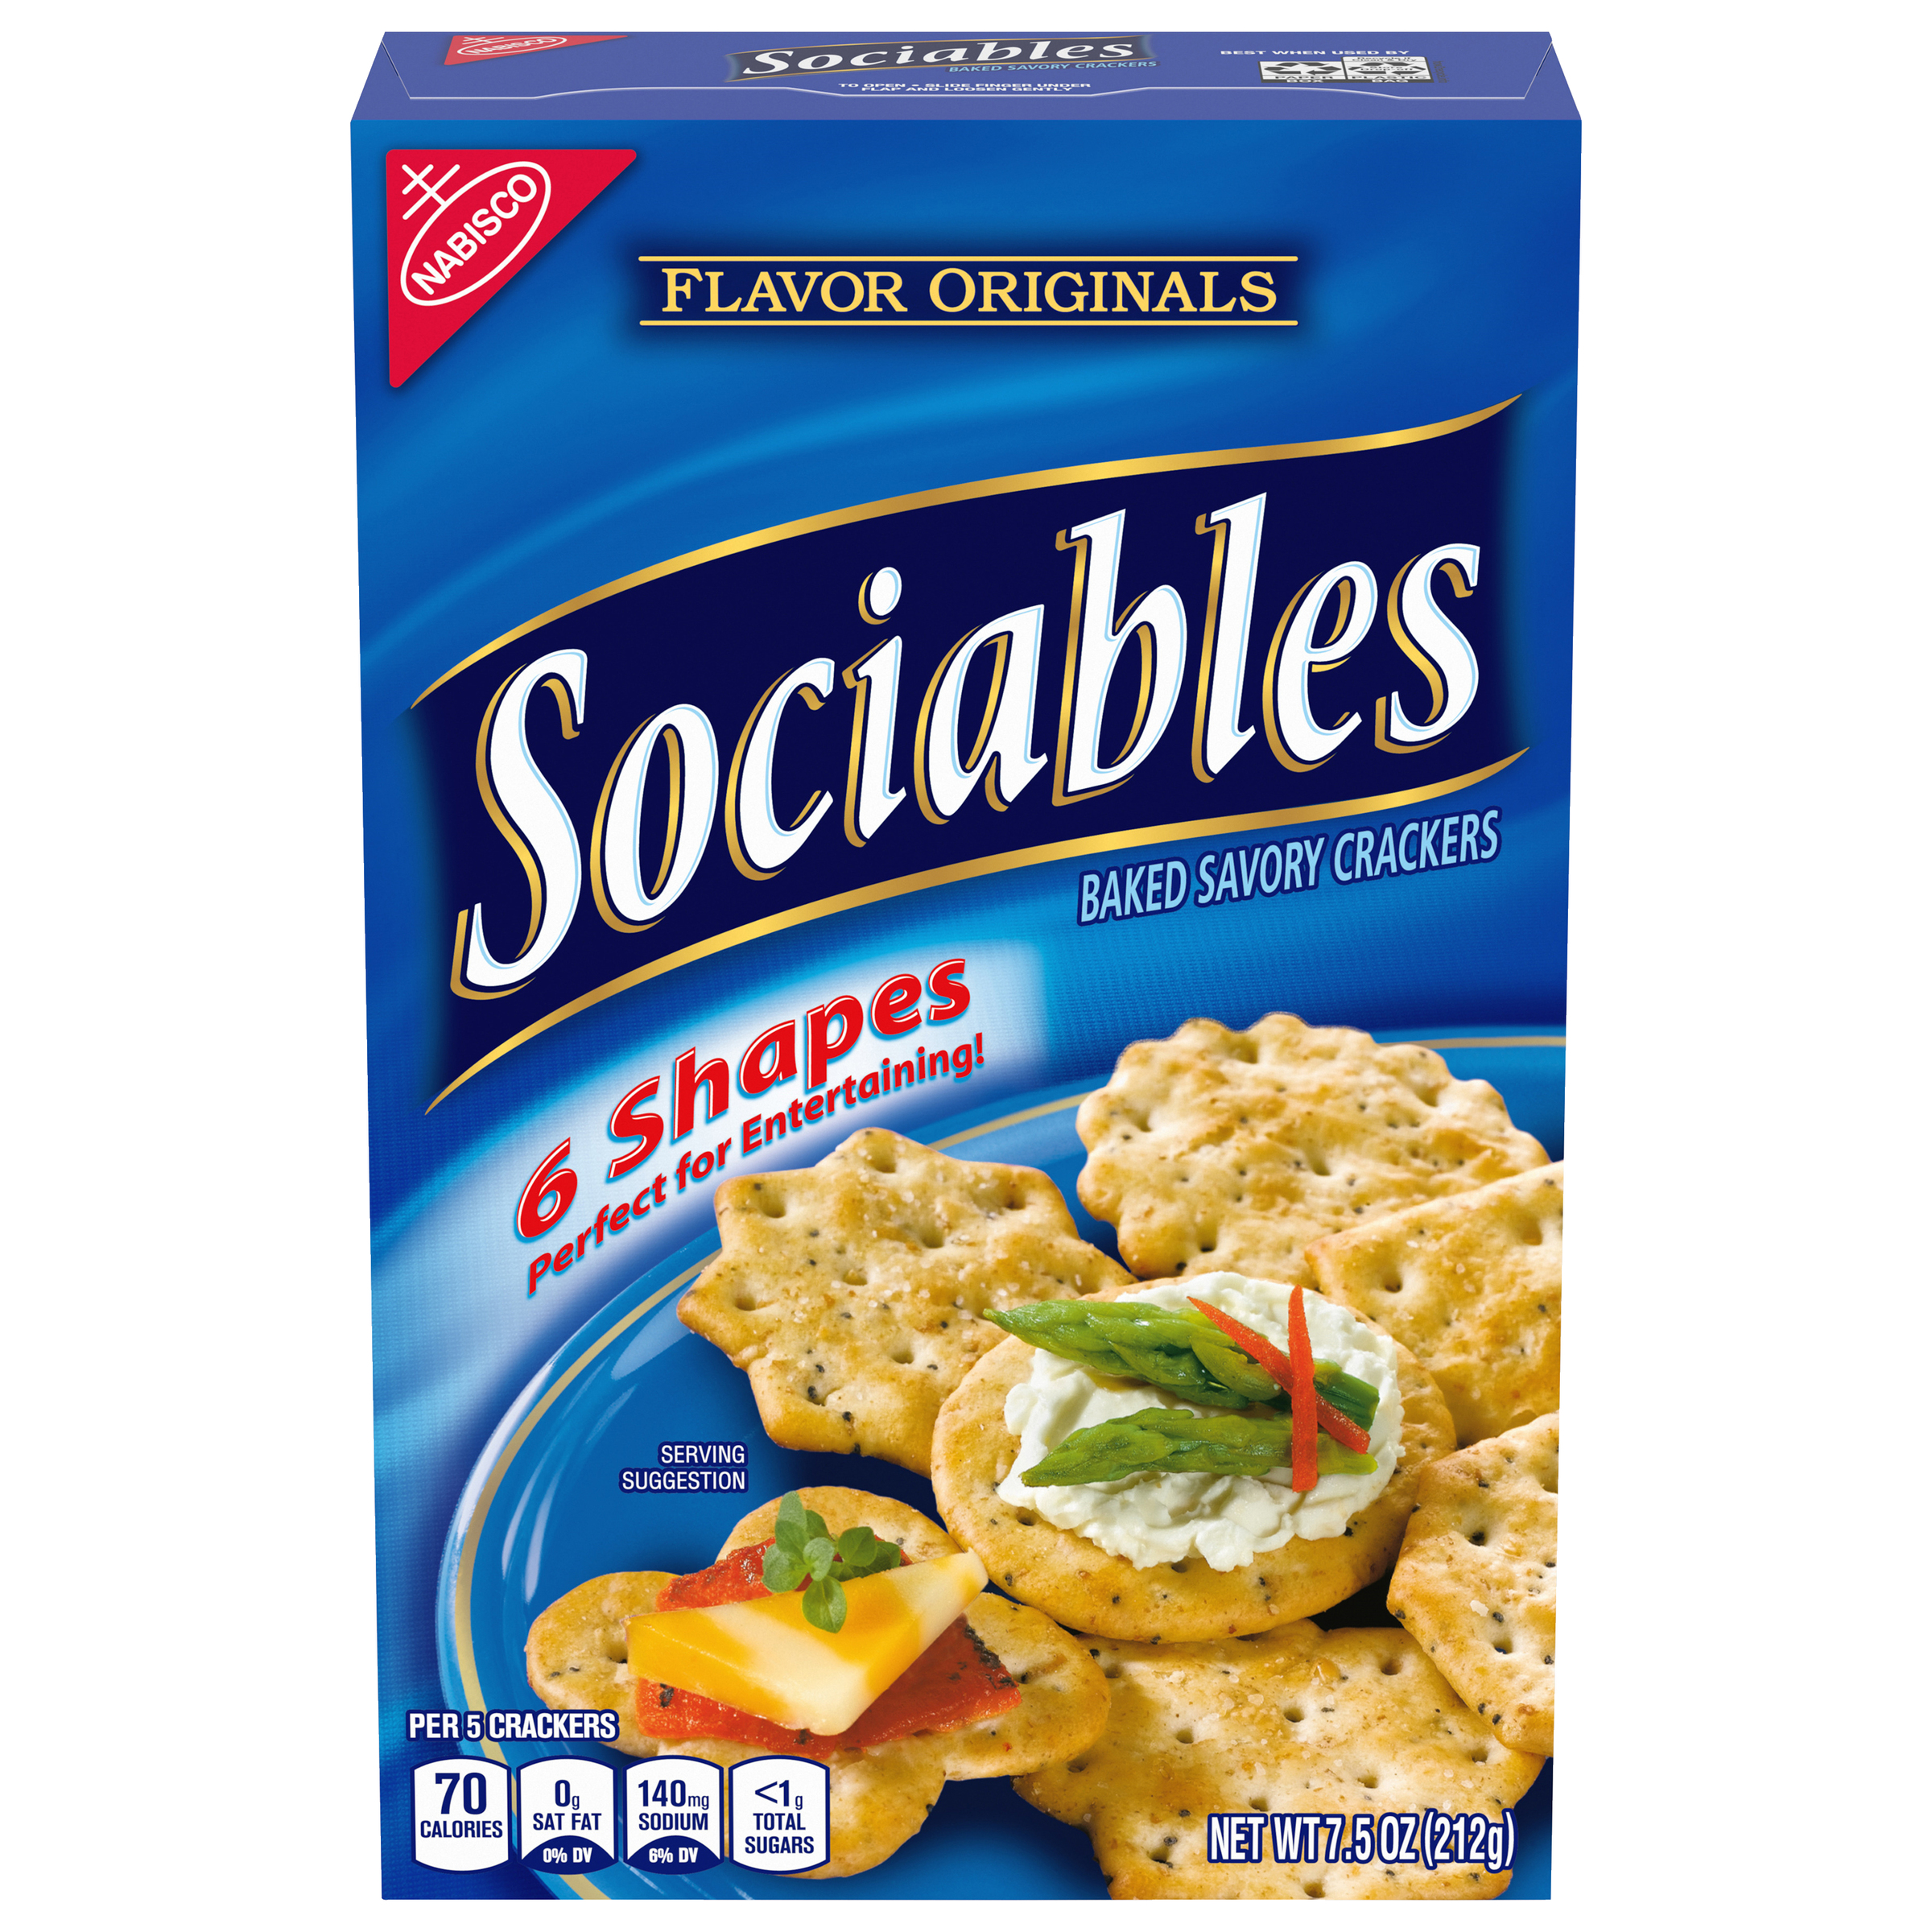 Flavor Originals Sociables Baked Savory Crackers, 7.5 oz-0